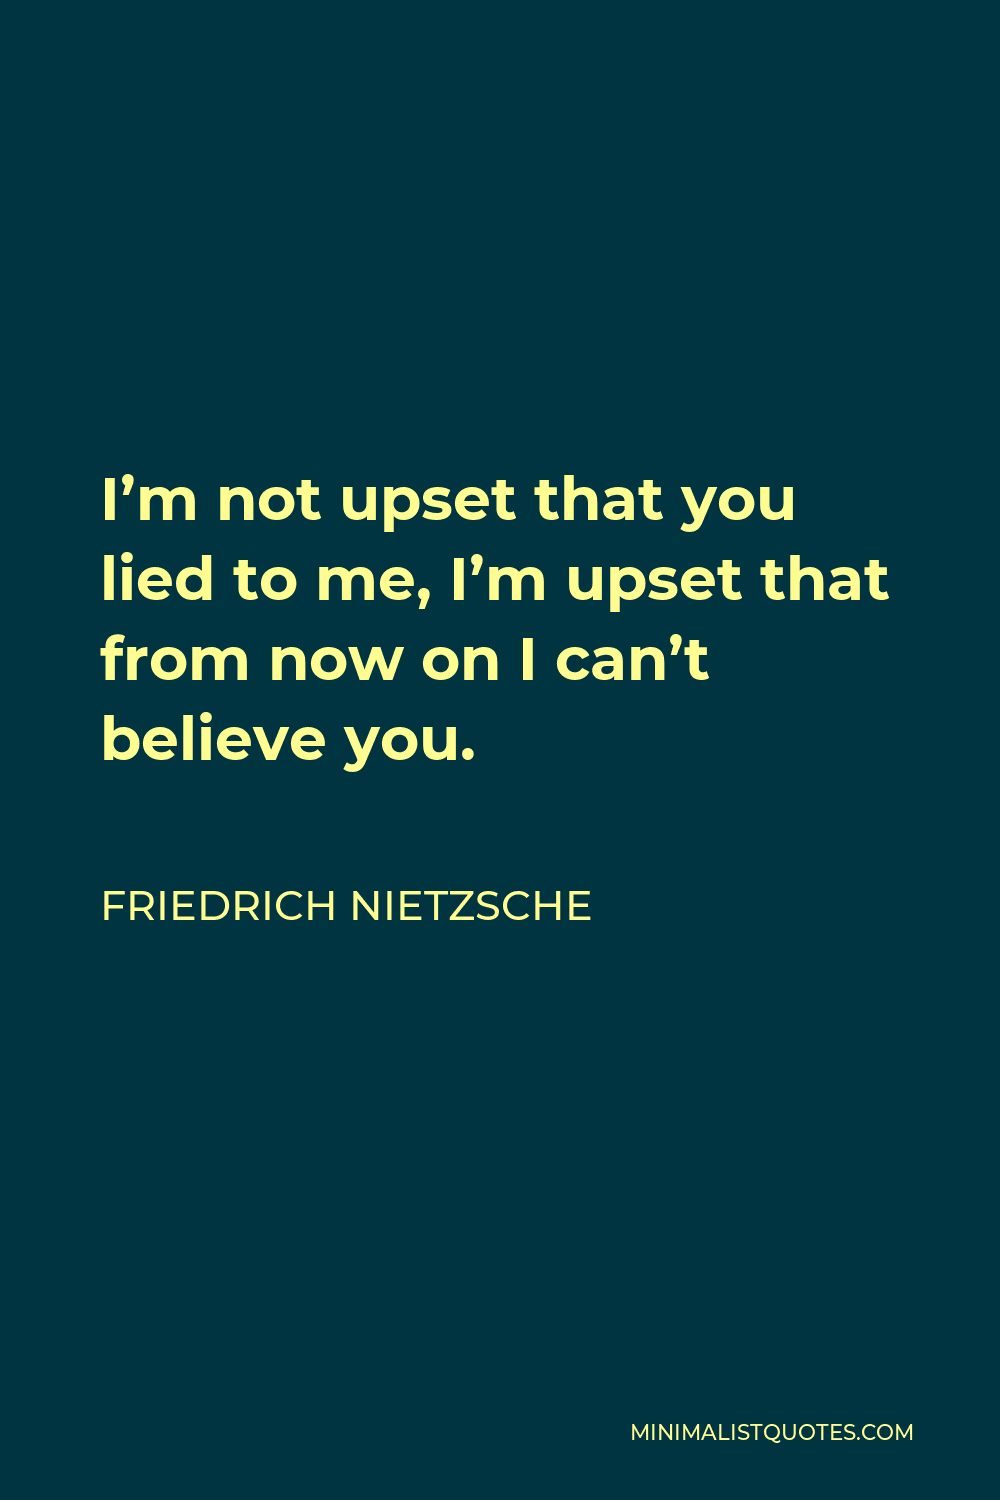 Friedrich Nietzsche Quote - I’m not upset that you lied to me, I’m upset that from now on I can’t believe you.